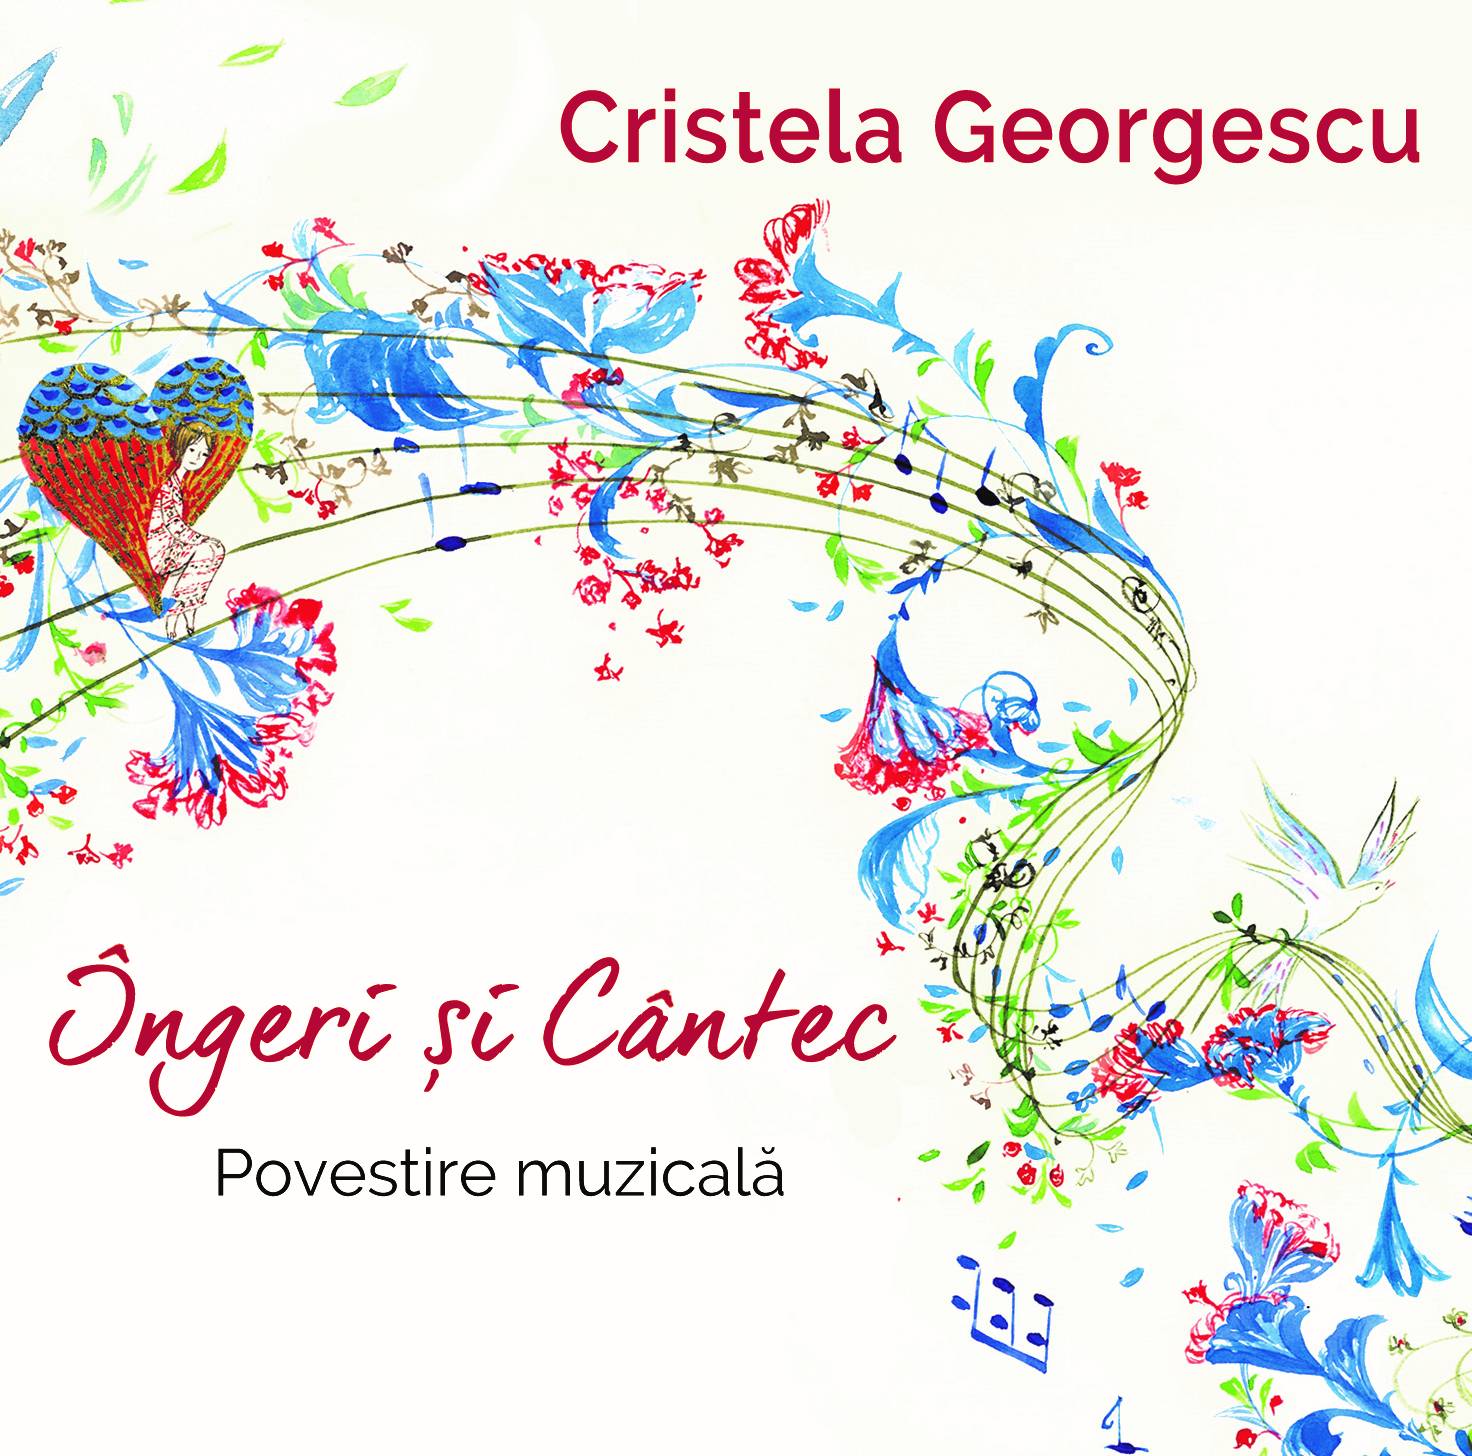 Ingeri si cantec - povestire muzicala - cd - cristela georgescu